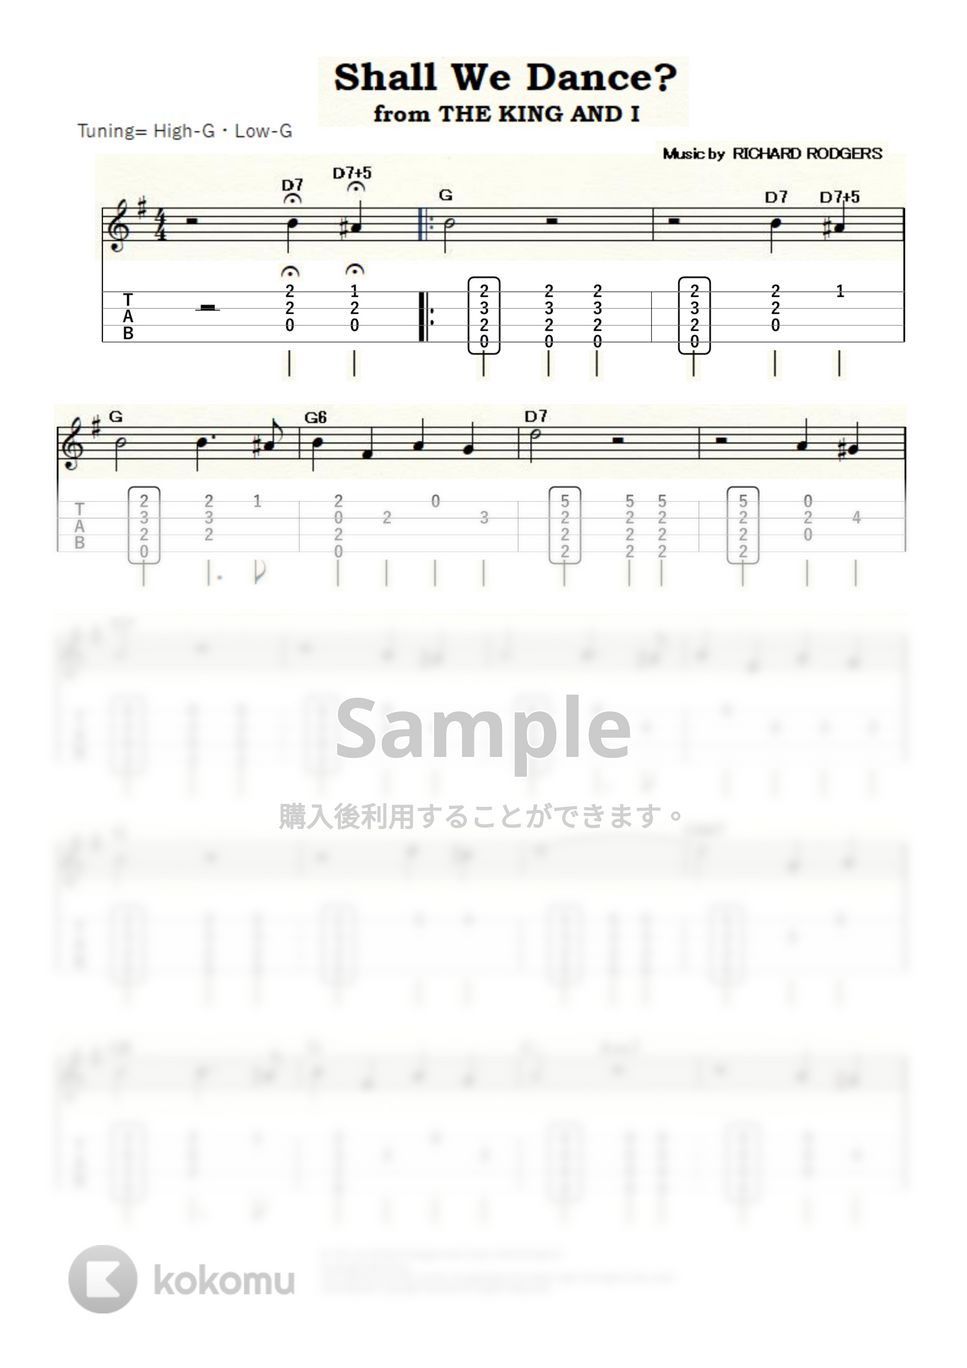 Shall We ダンス? - Shall We Dance? (ｳｸﾚﾚｿﾛ / High-G・Low-G / 中級) by ukulelepapa